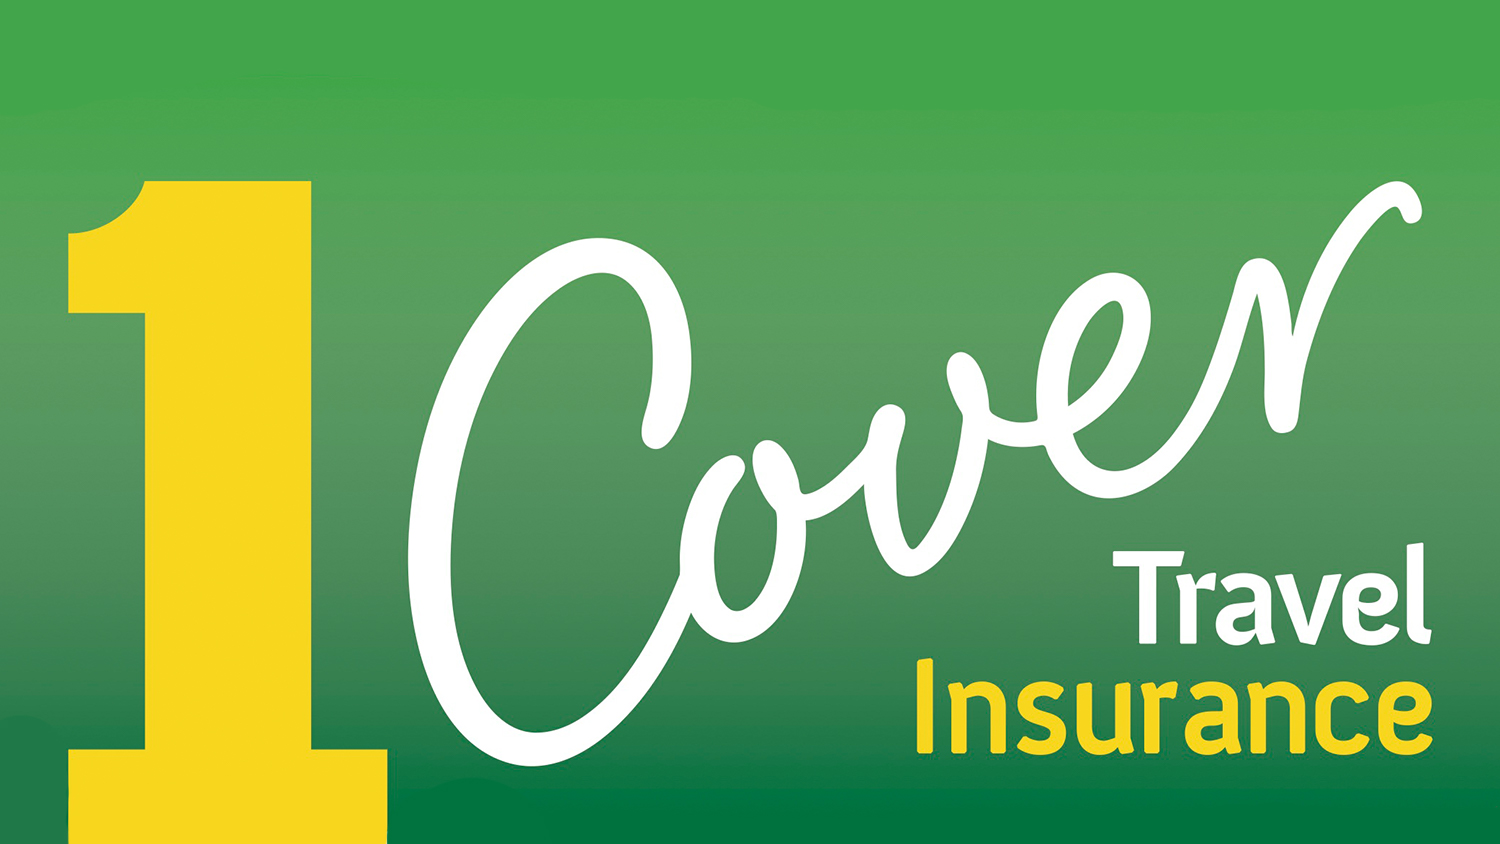 1cover travel insurance usa